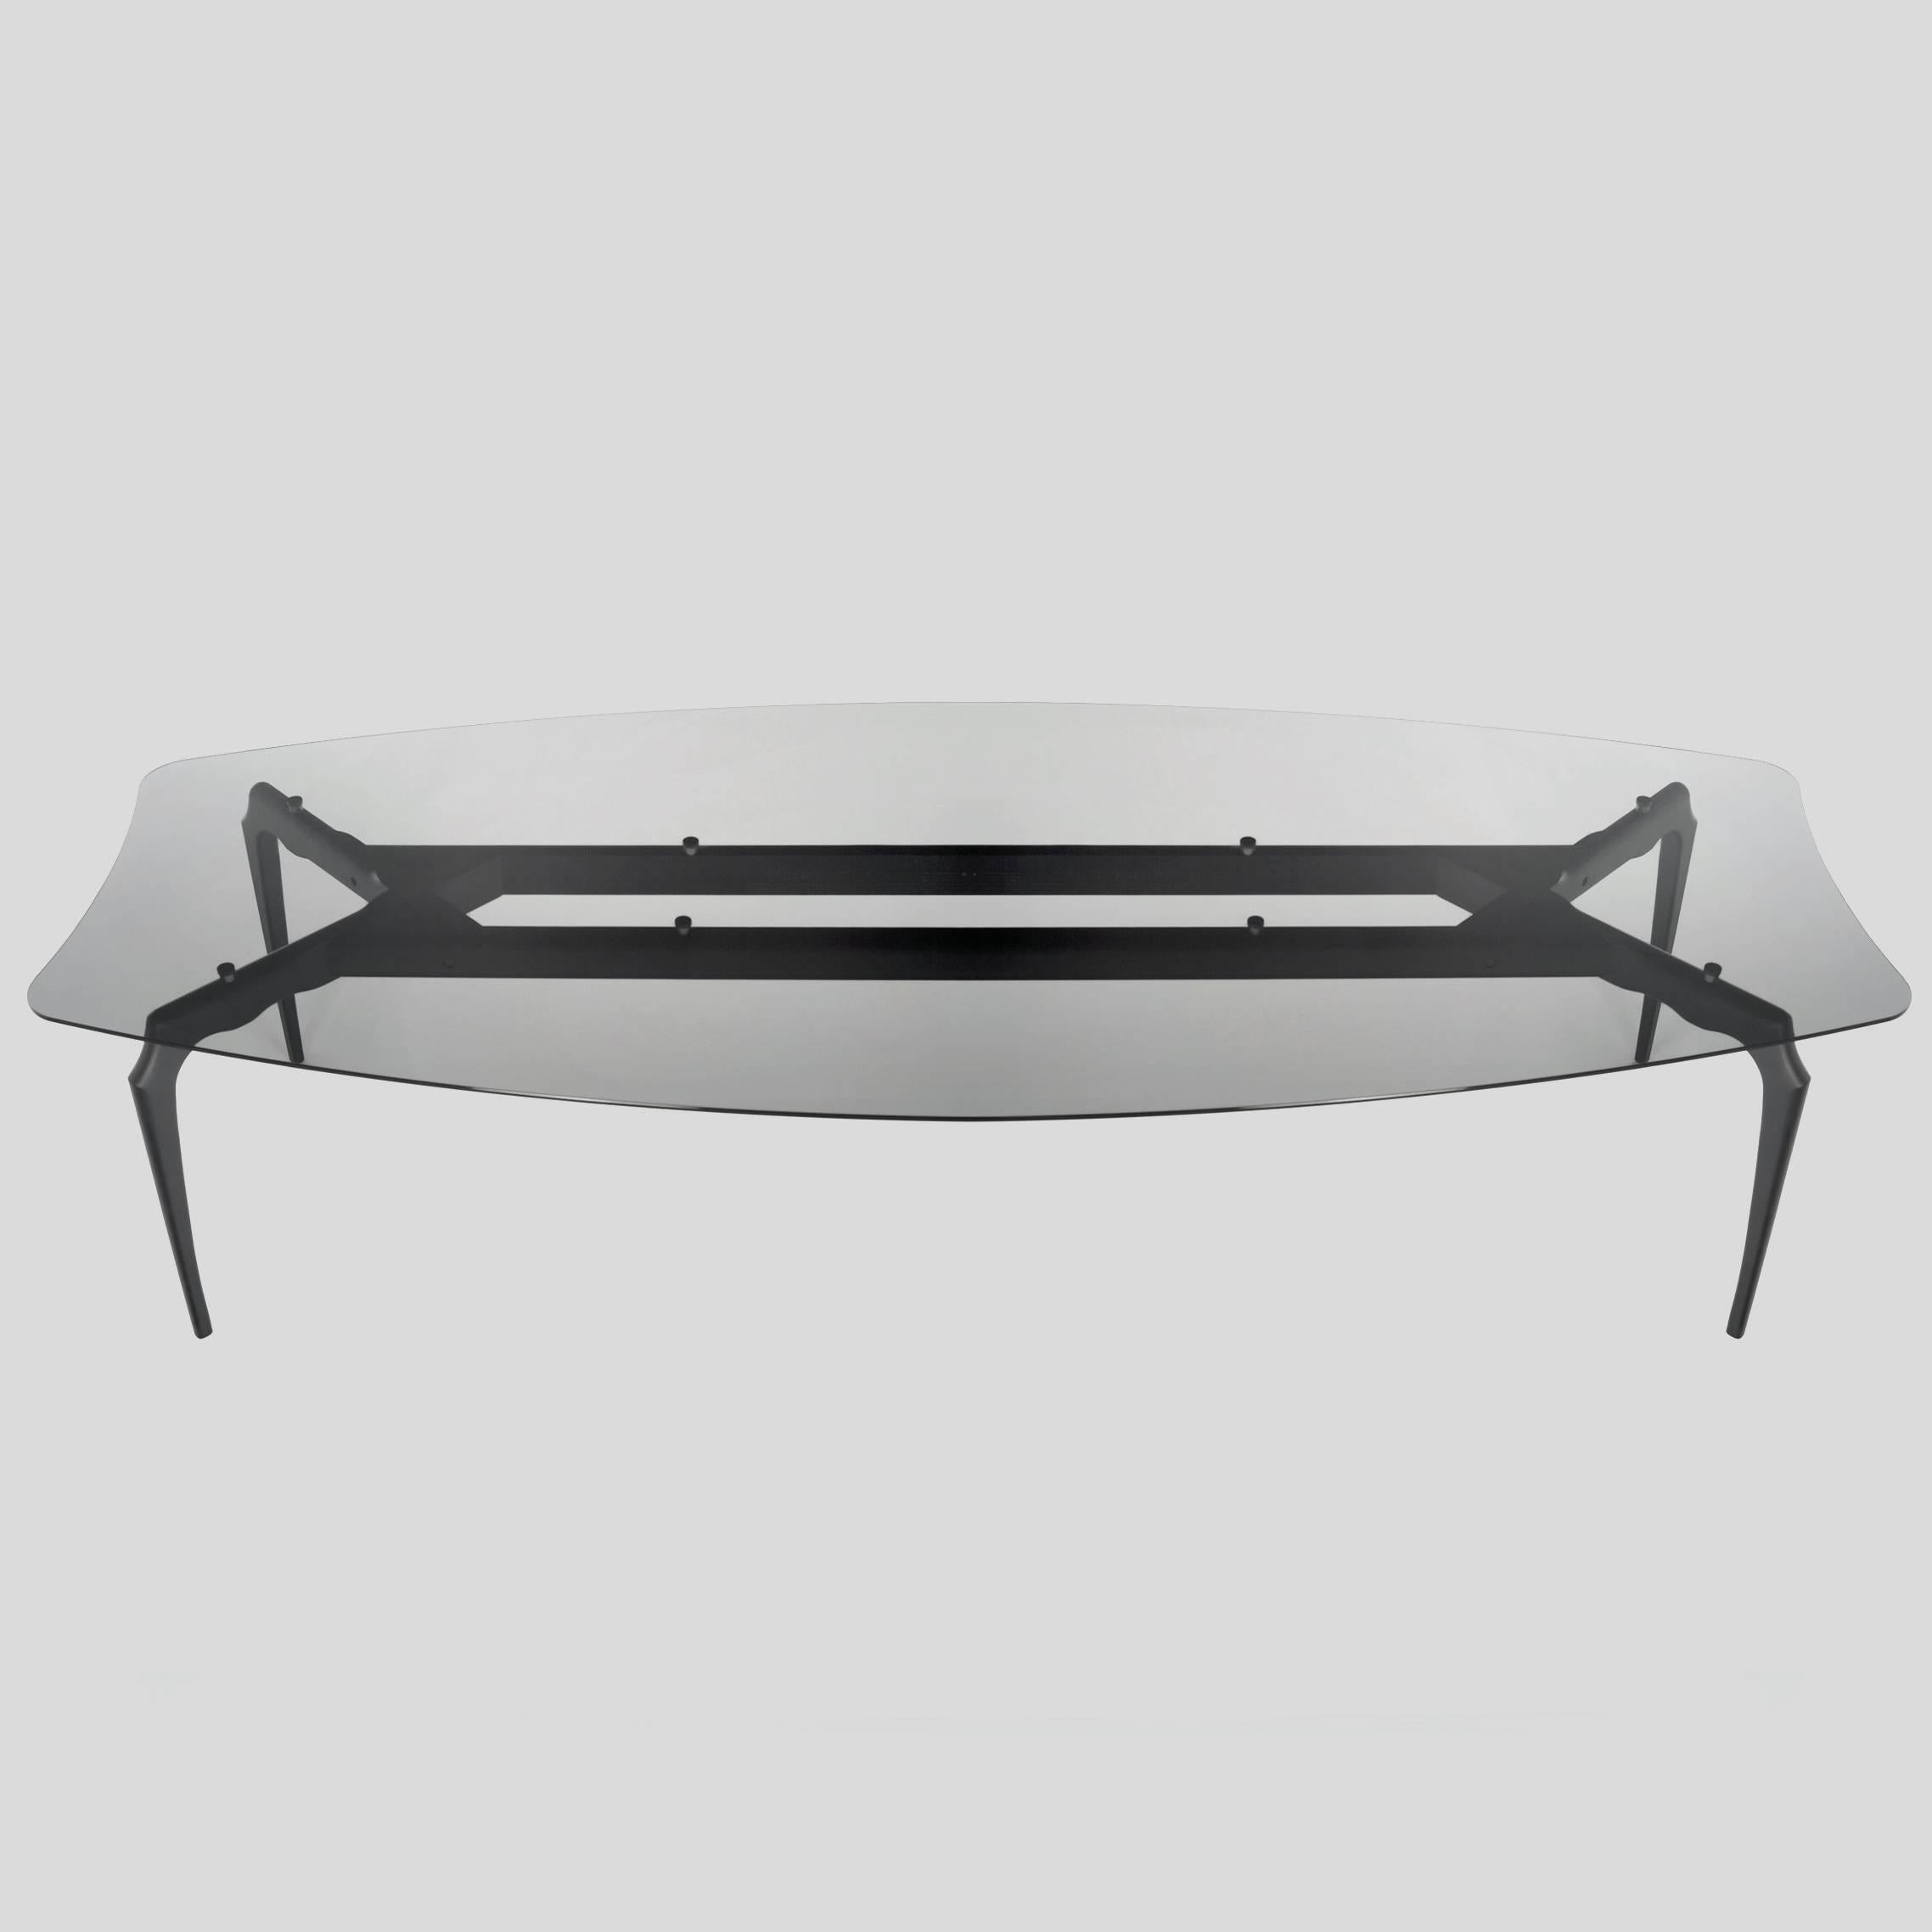 Oscar Tusquets Large Table 'Gaulino' Wood / Grey Glass by BD Barcelona 2